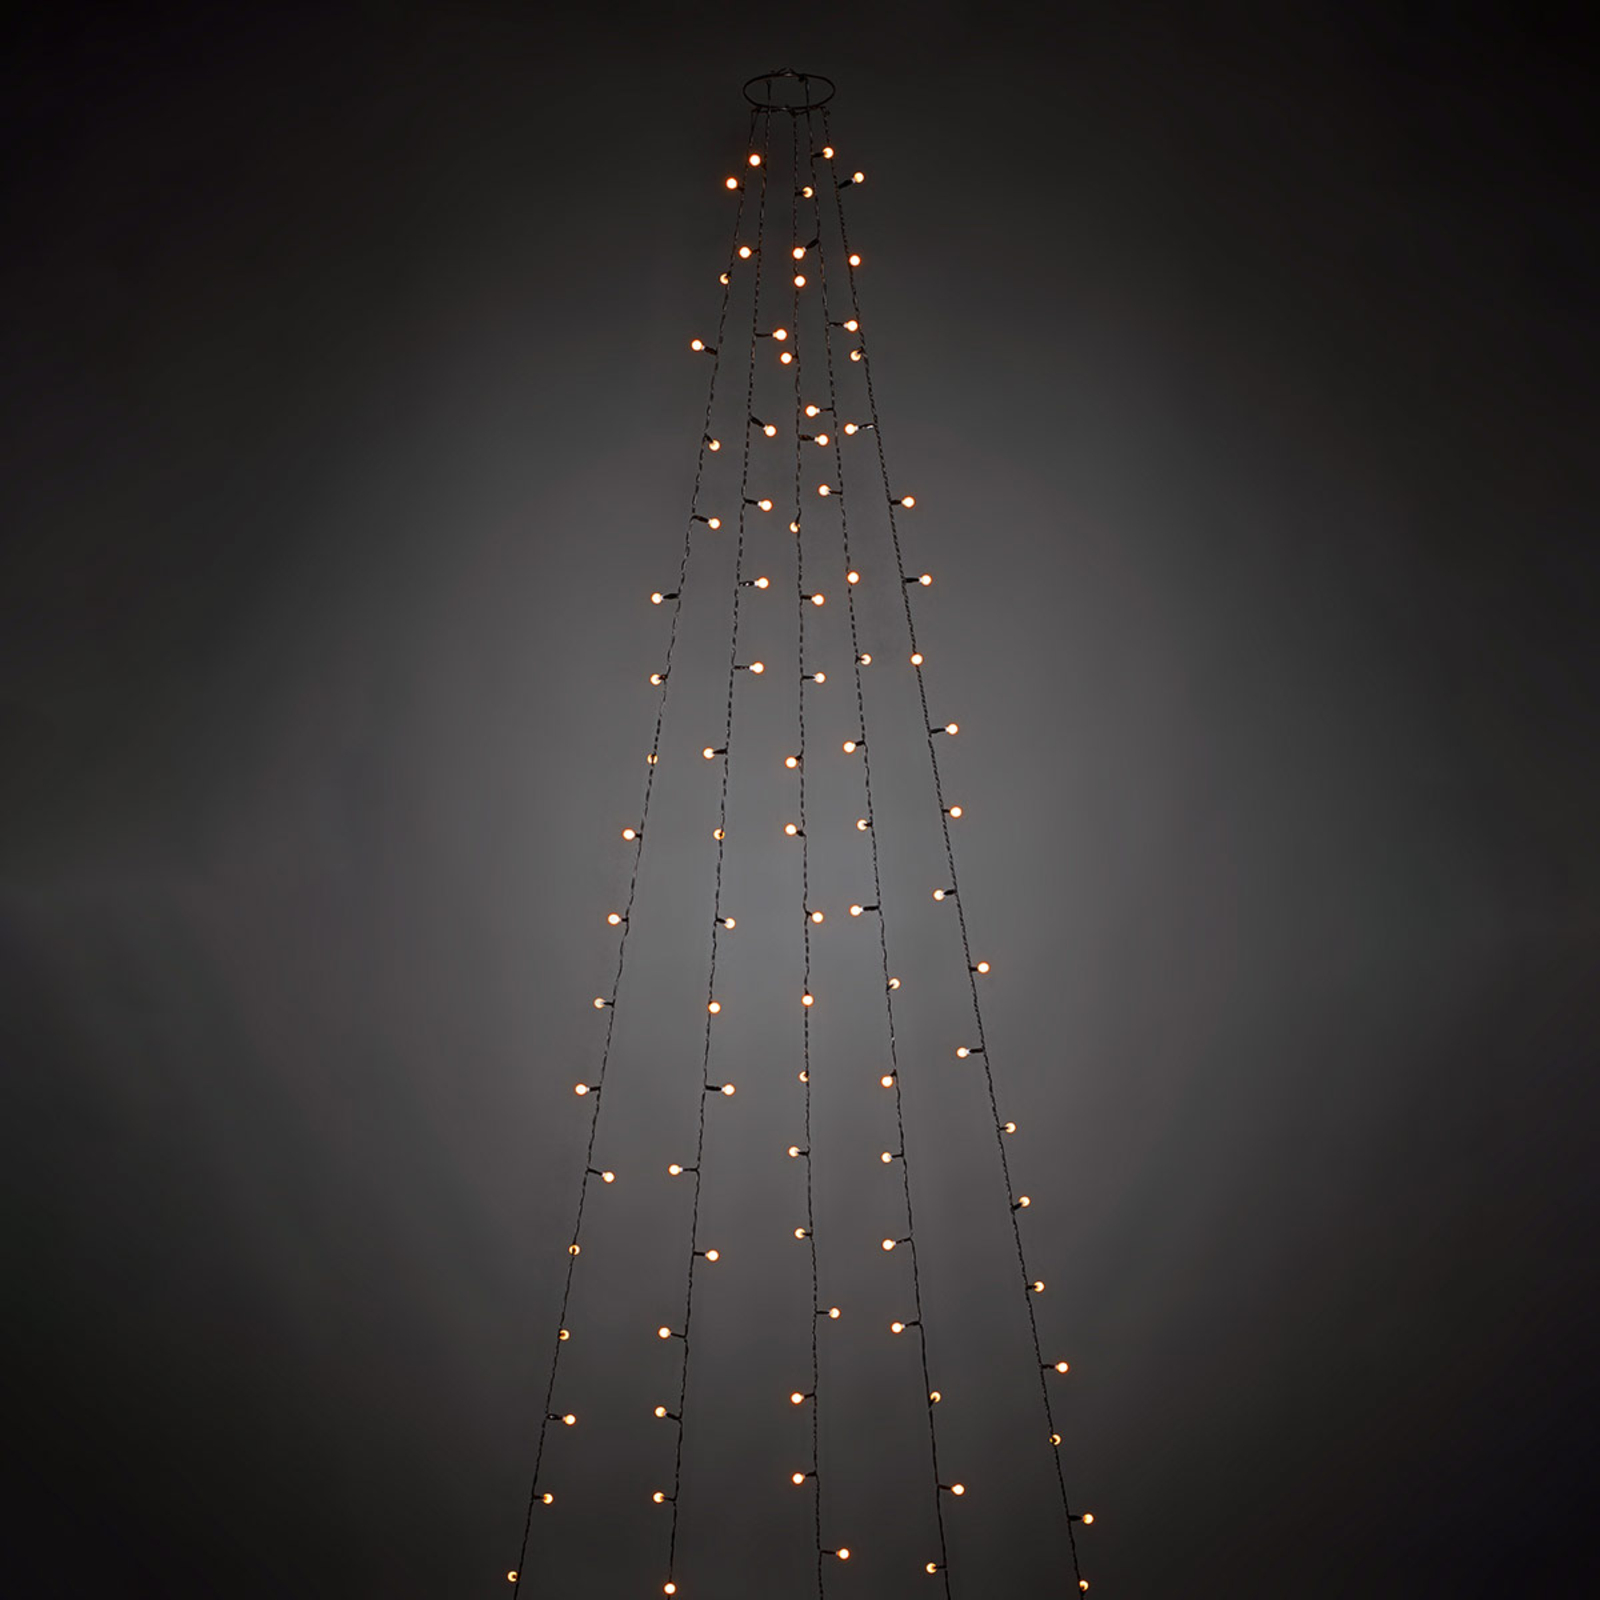 LED-julgransslinga med 200 monterade globlampor